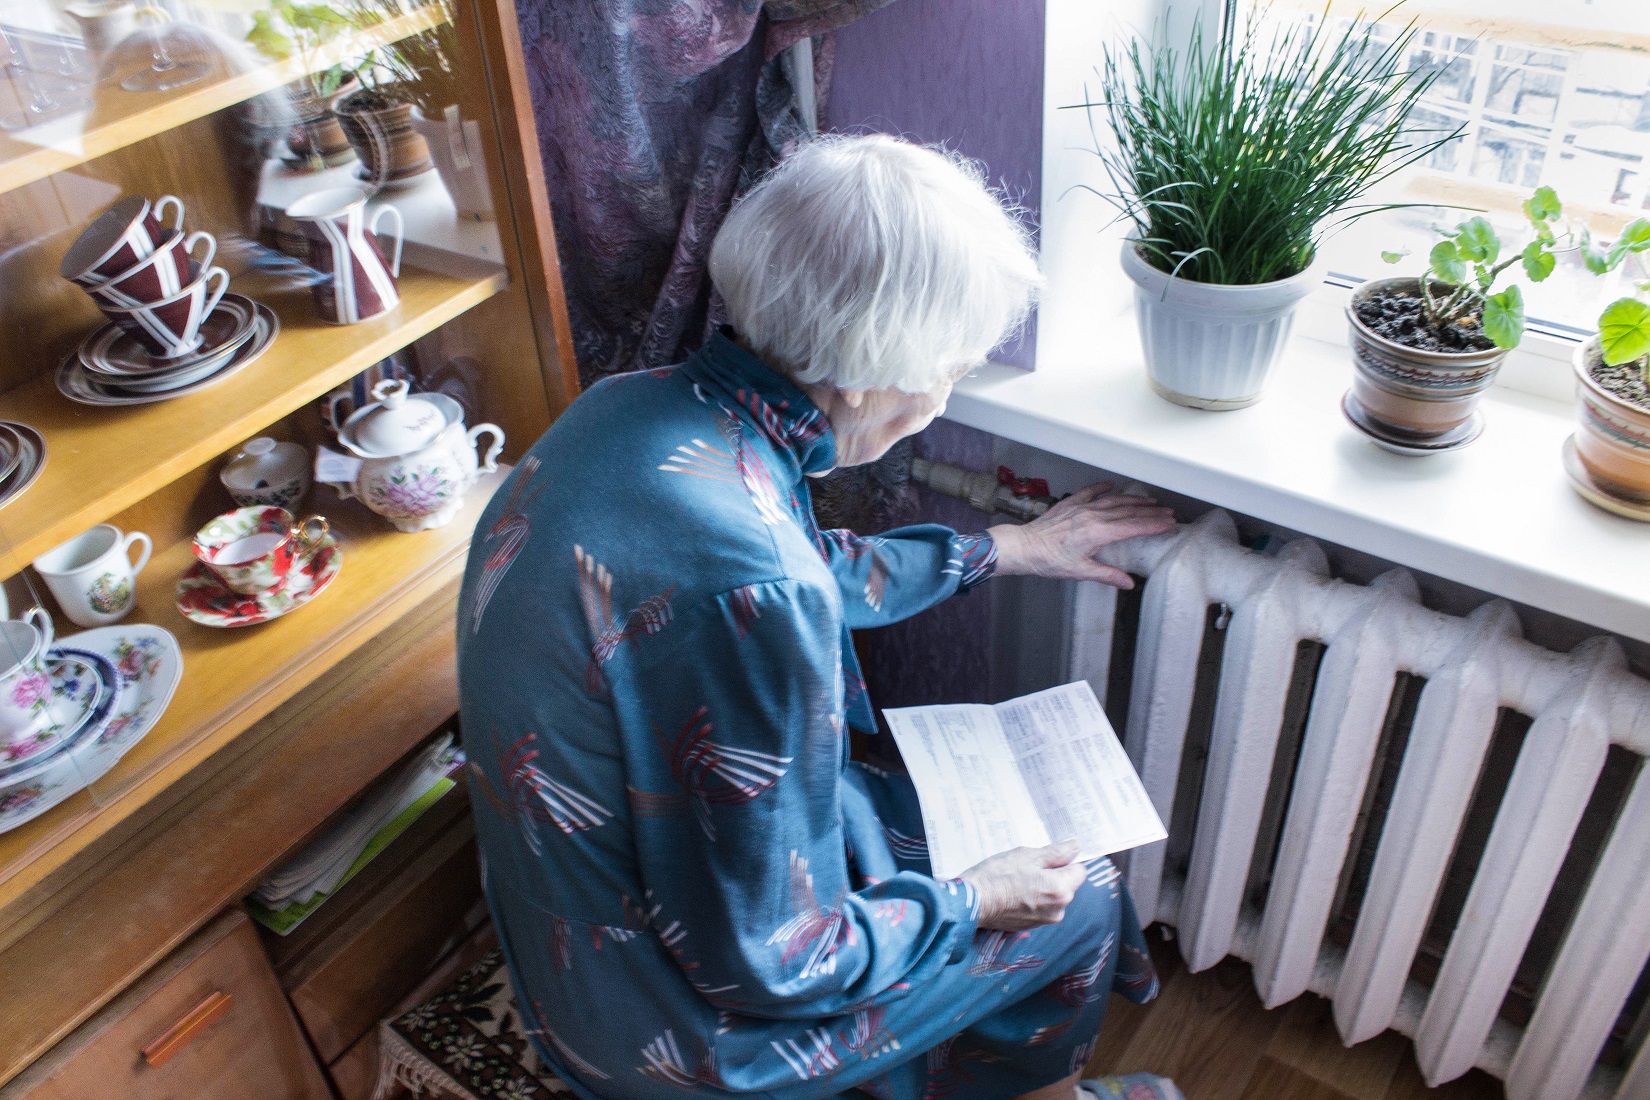 Elderly woman holds her hand against her heater